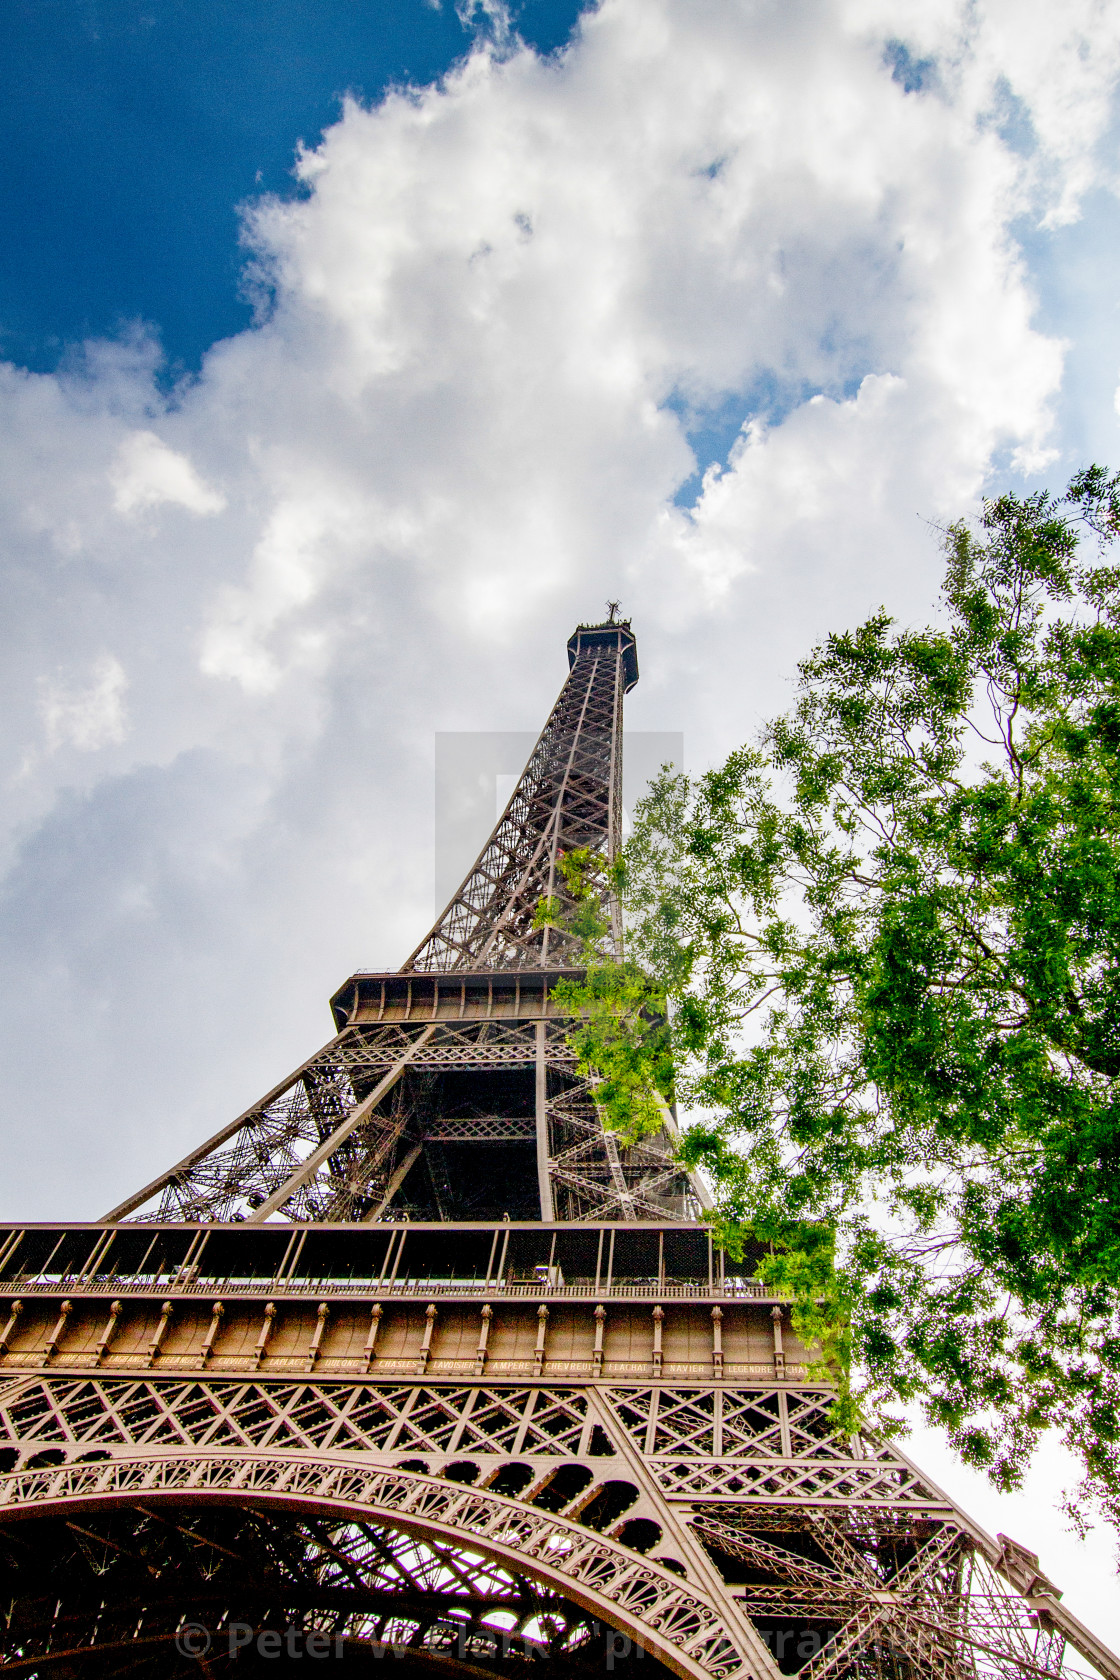 "The Eiffel Tower, Paris." stock image